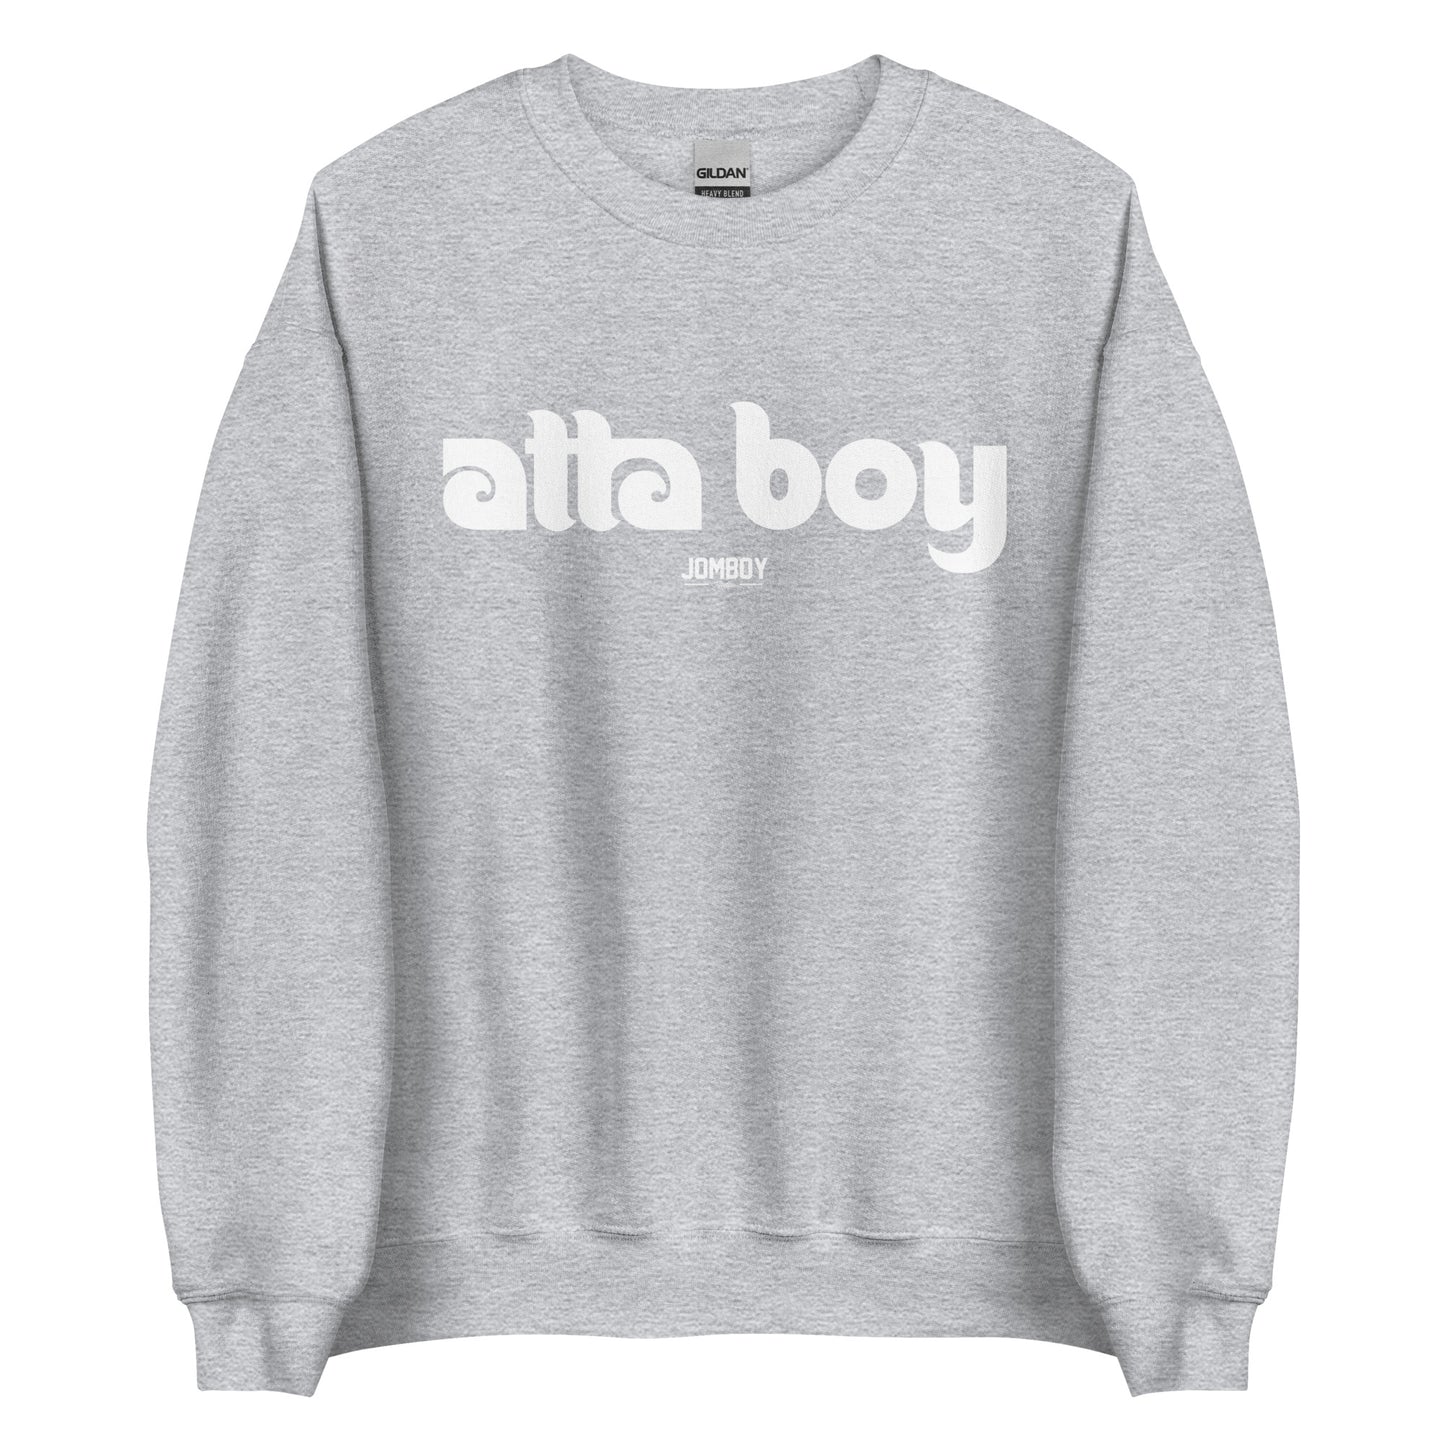 Atta Boy | Crewneck Sweatshirt